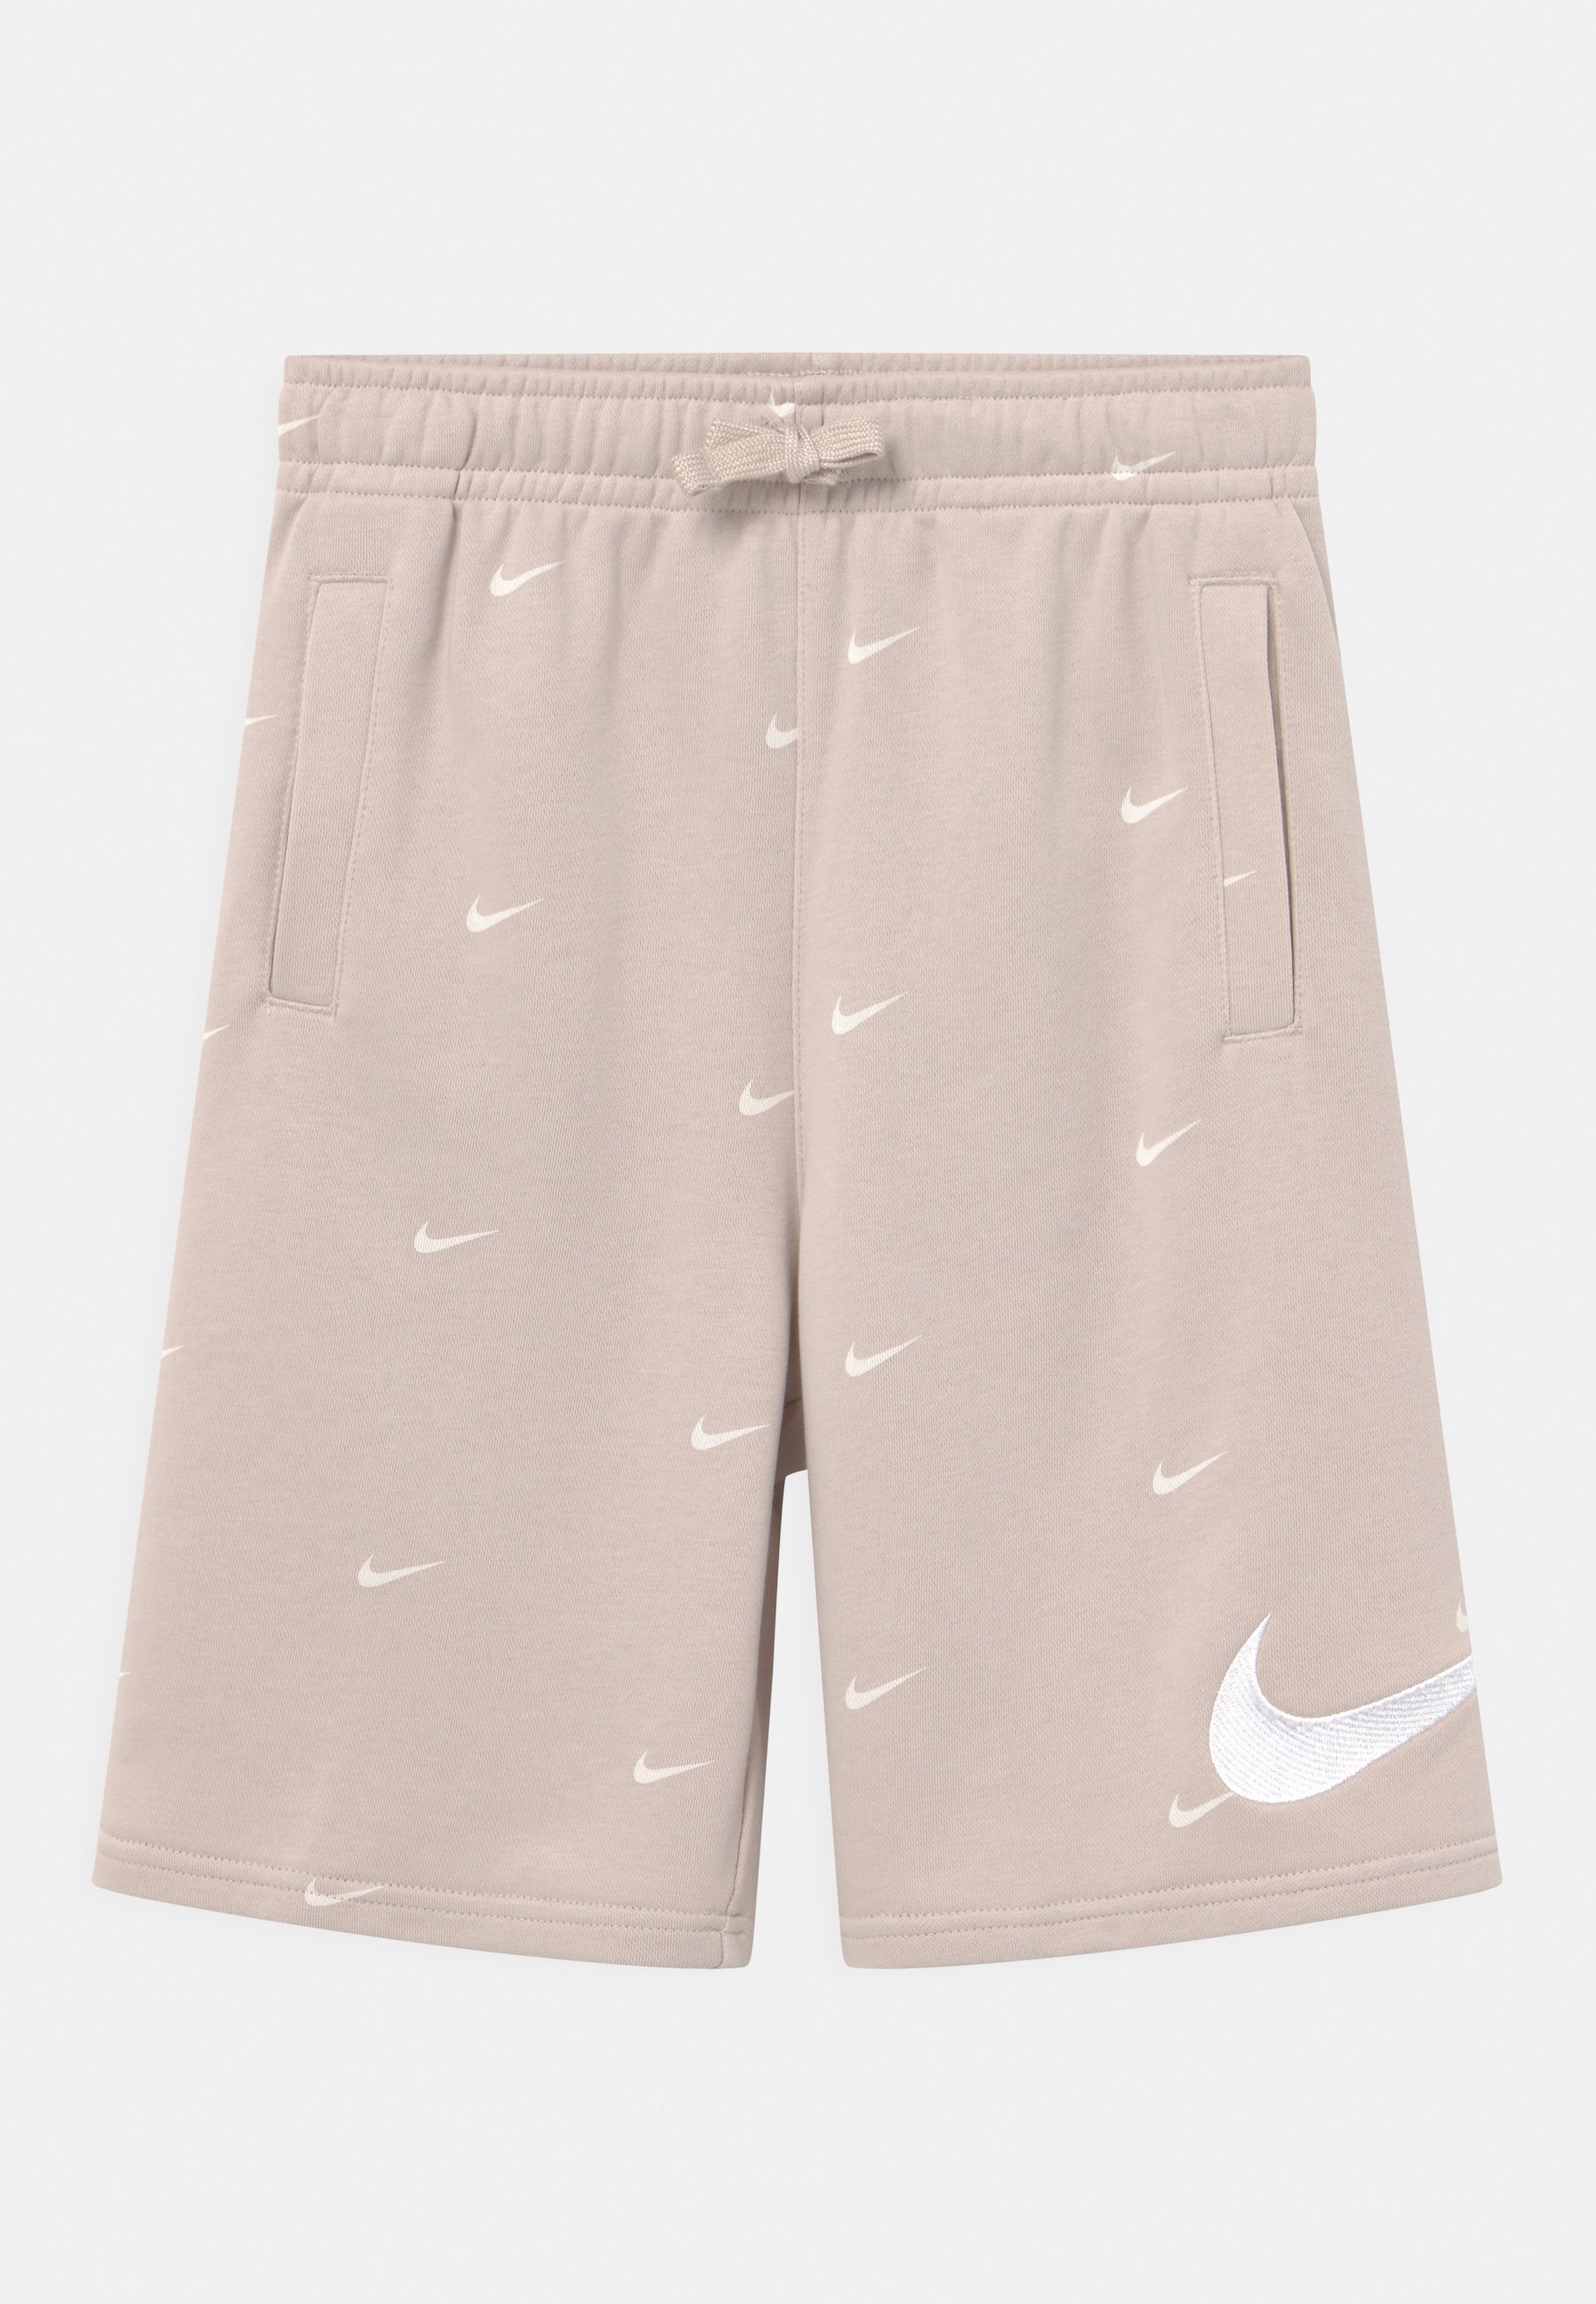 Nike Sportswear Shorts - desert sand/white/sand